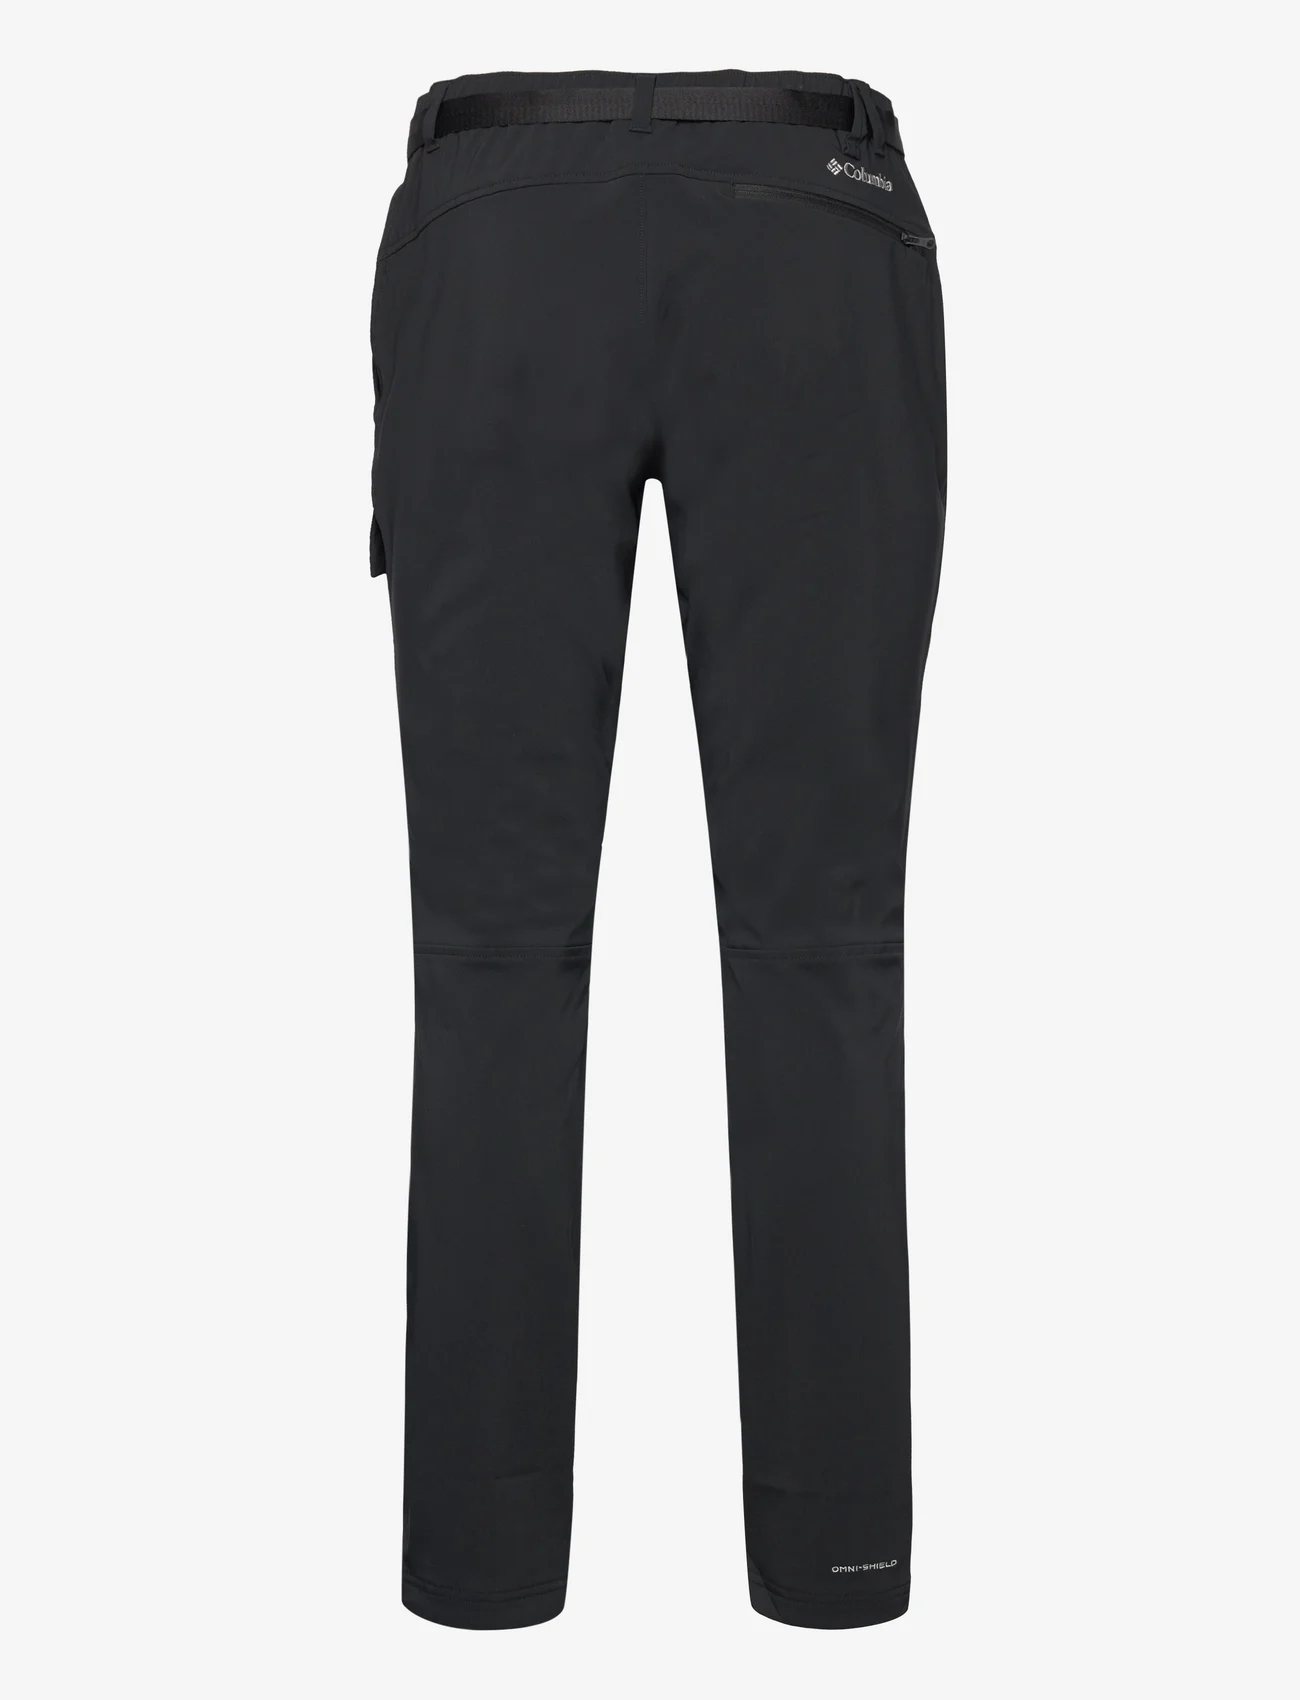 Columbia Sportswear - Maxtrail Midweight Warm Pant - ulkoiluhousut - black - 1